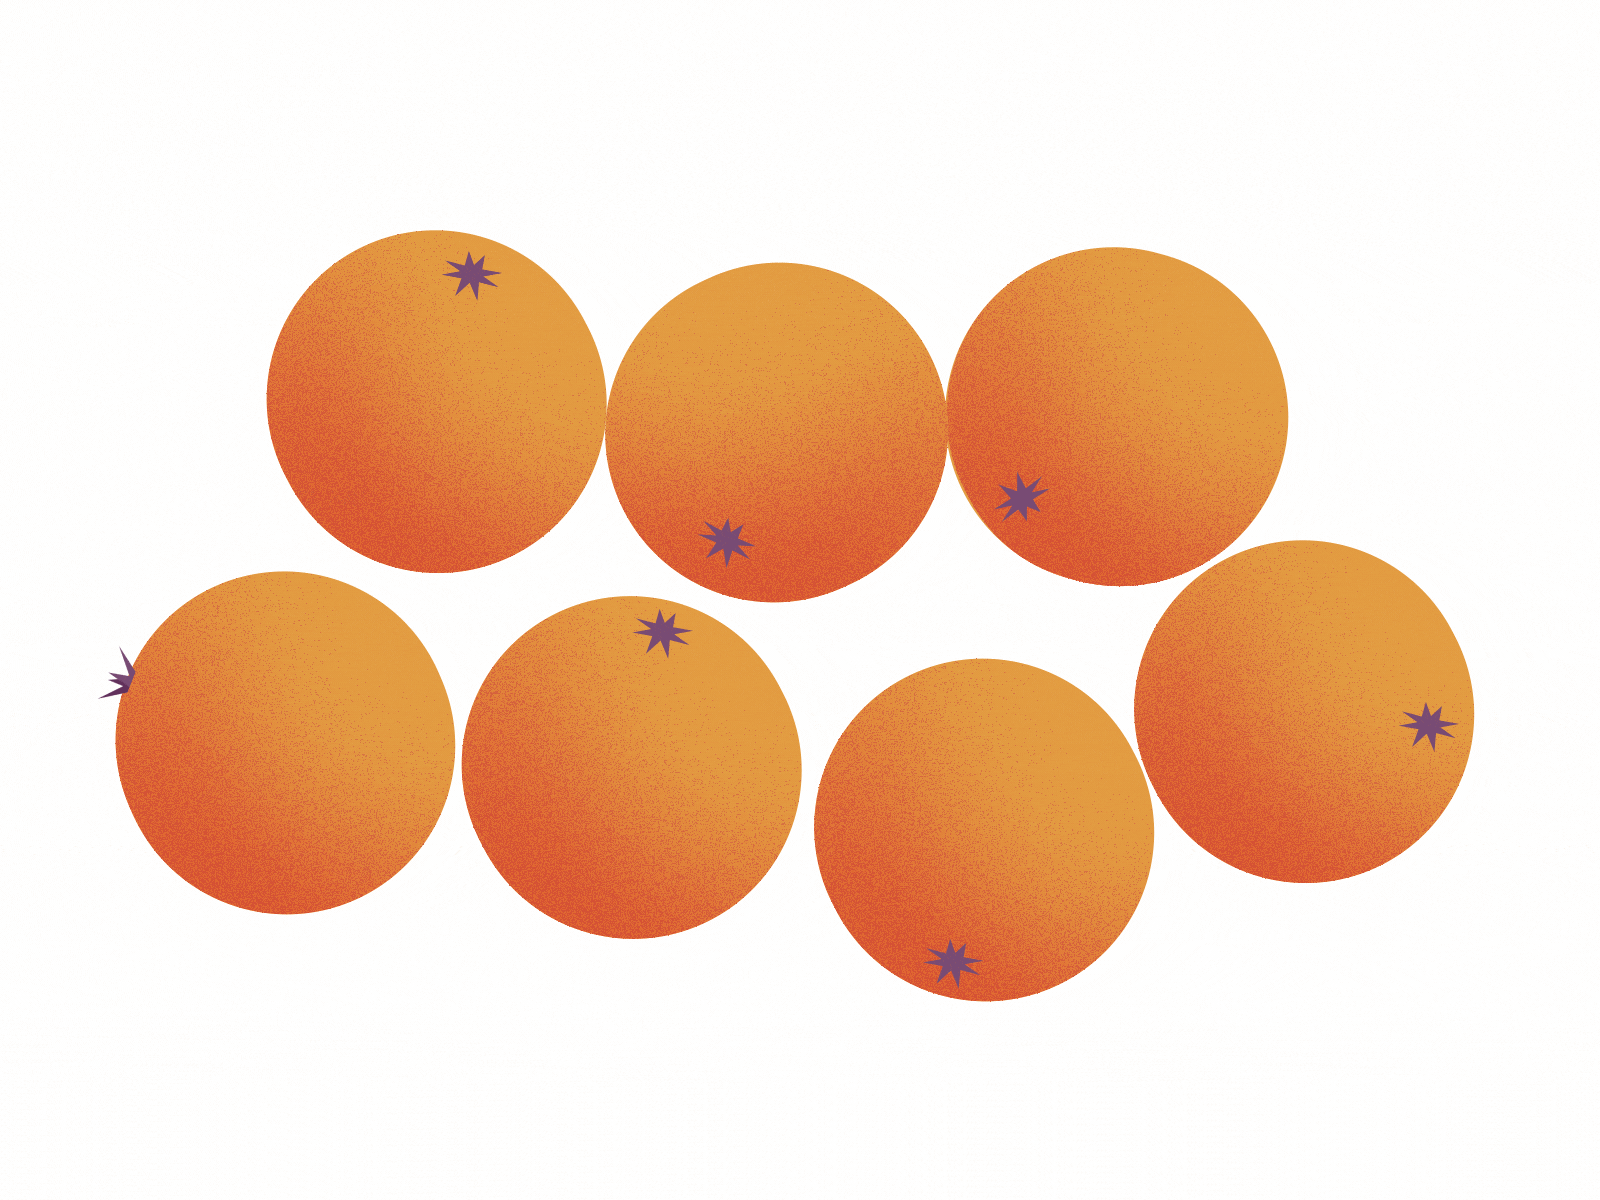 Juicy oranges 🍊